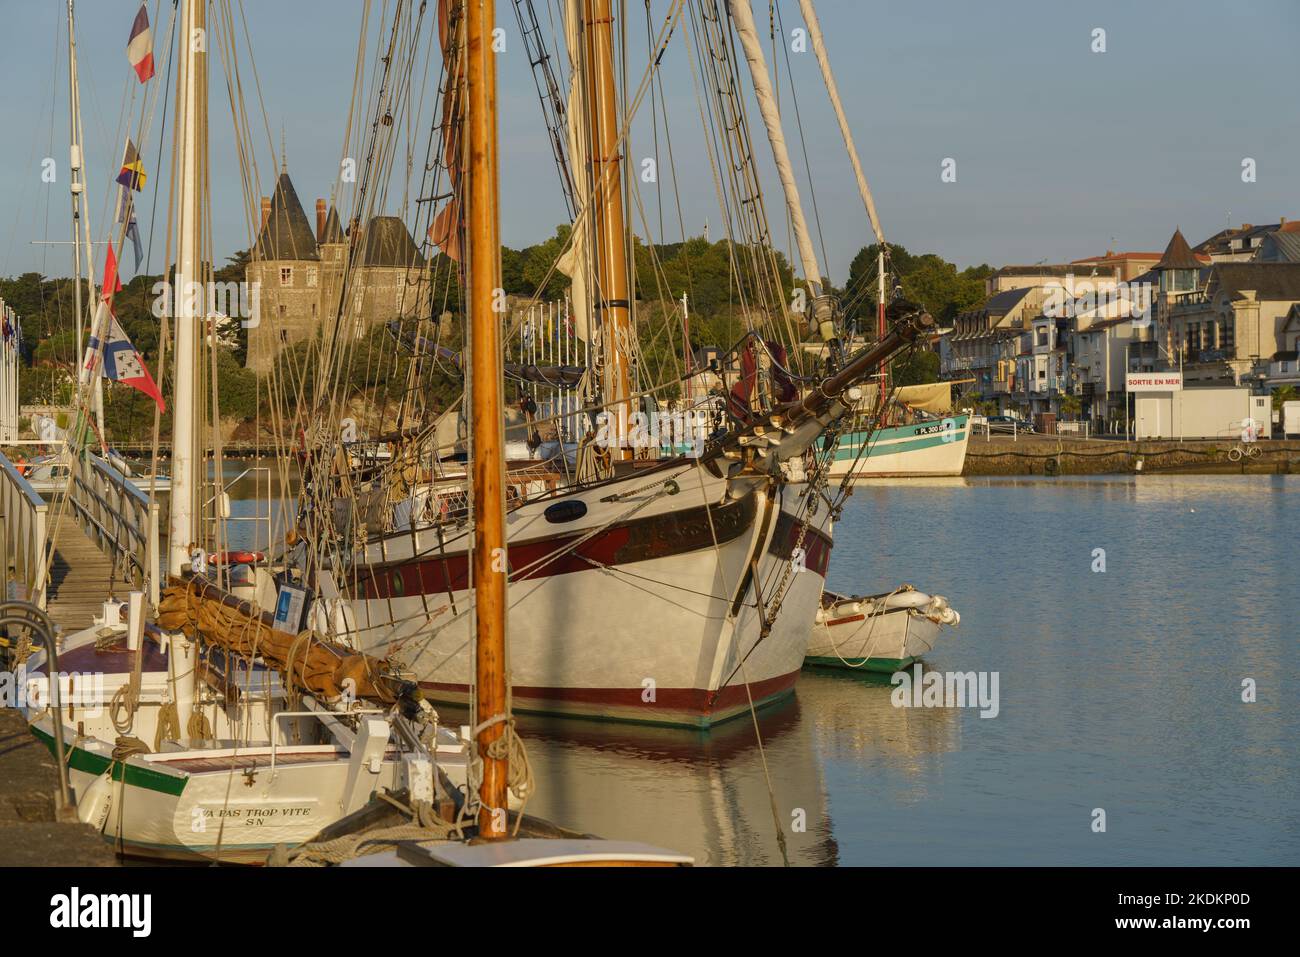 France, Pays de la Loire region, Loire-Atlantique, Pornic, old rigging in port Stock Photo